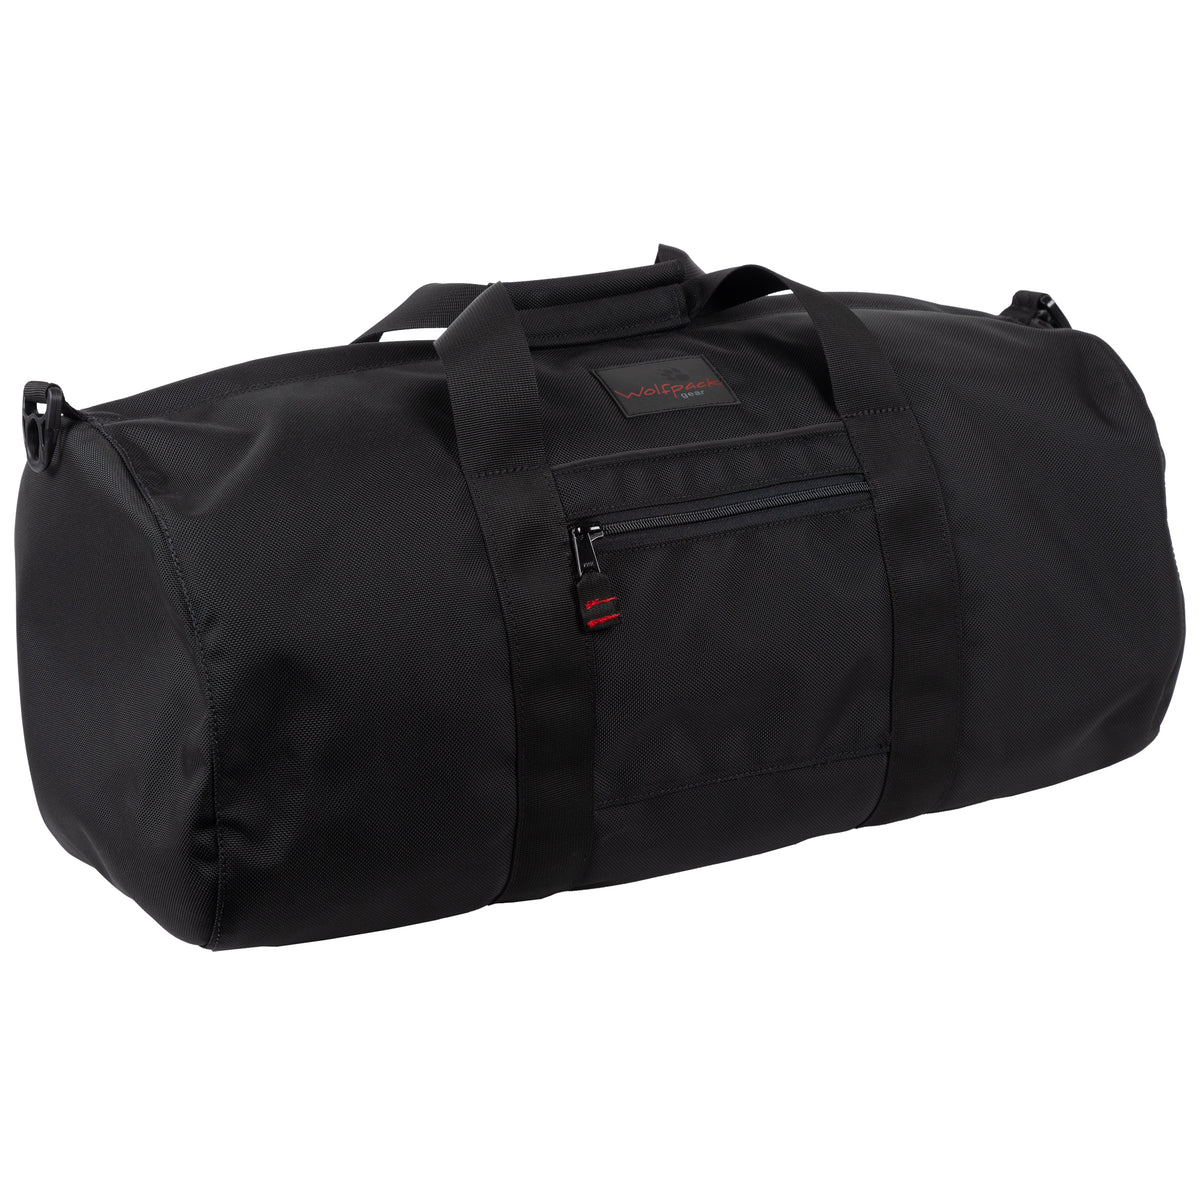 Wolfpack Gear™ Medium Duffle Bag. Made in USA